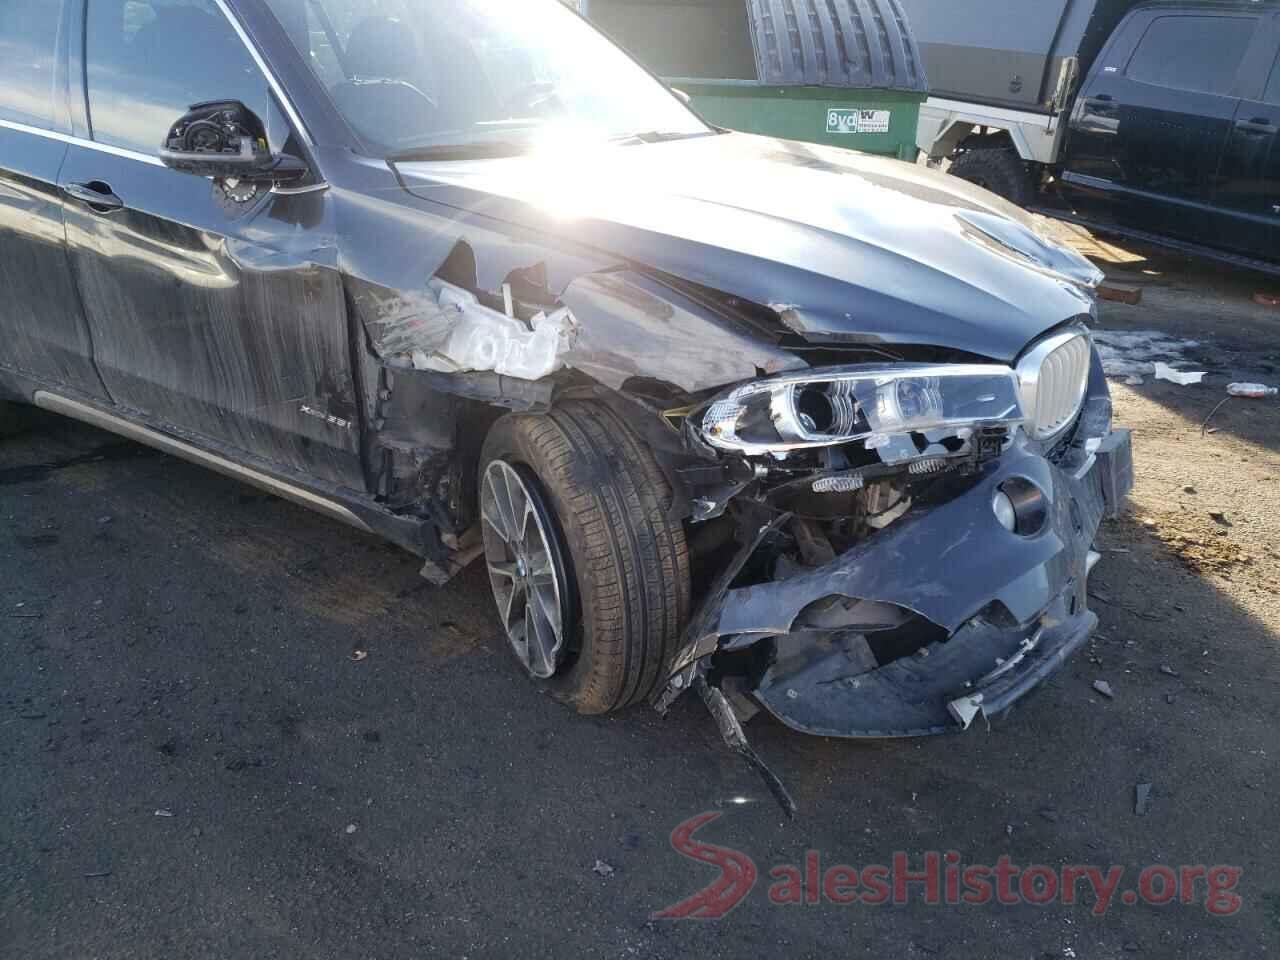 5UXKR0C53H0V50499 2017 BMW X5